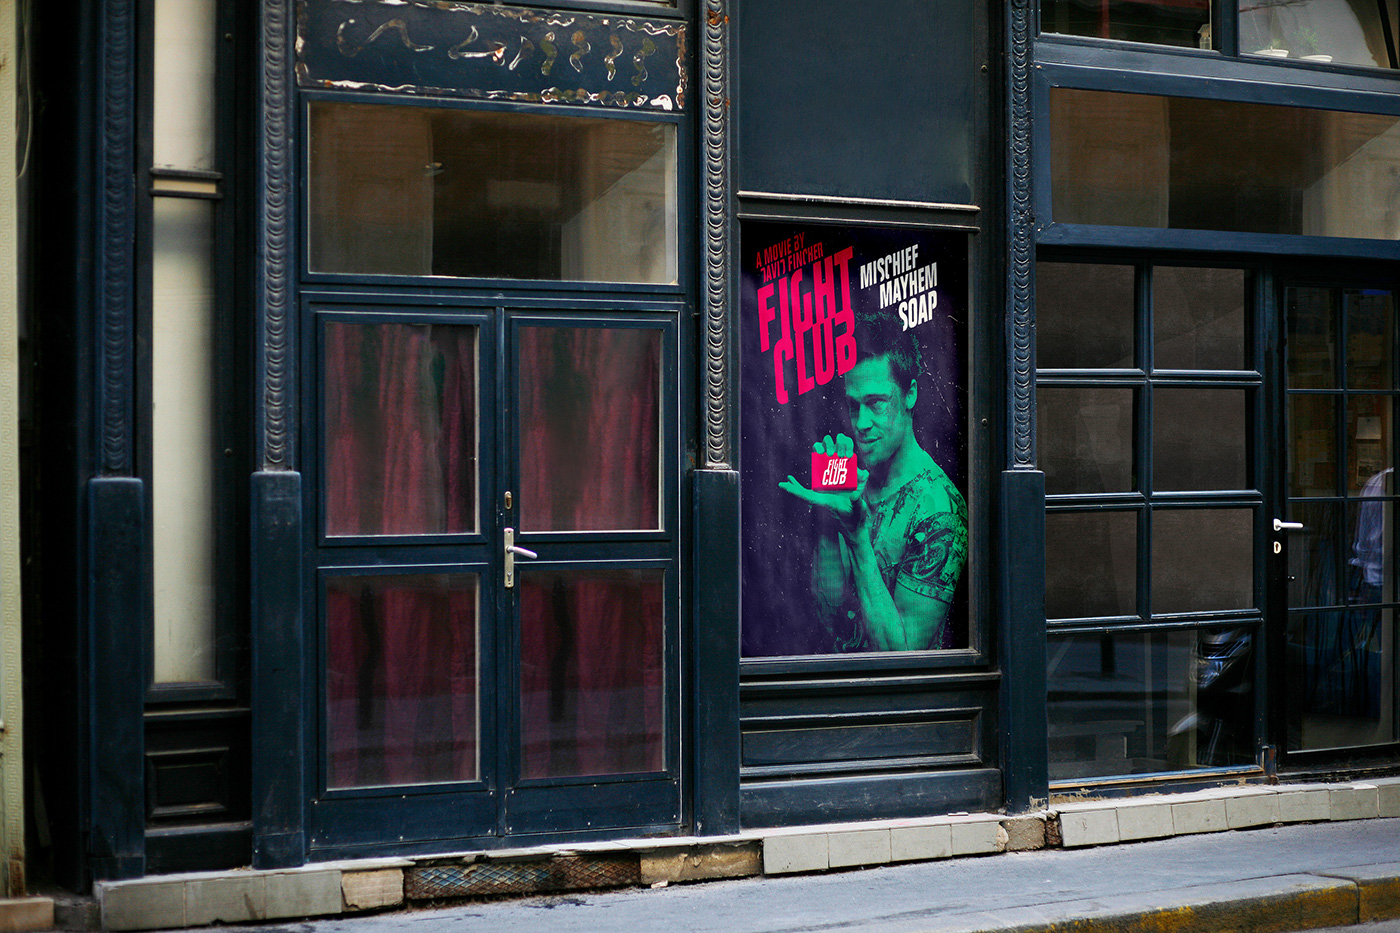 fight club silkscreen poster grunge dot Movies Film   Brad Pitt Urban Street